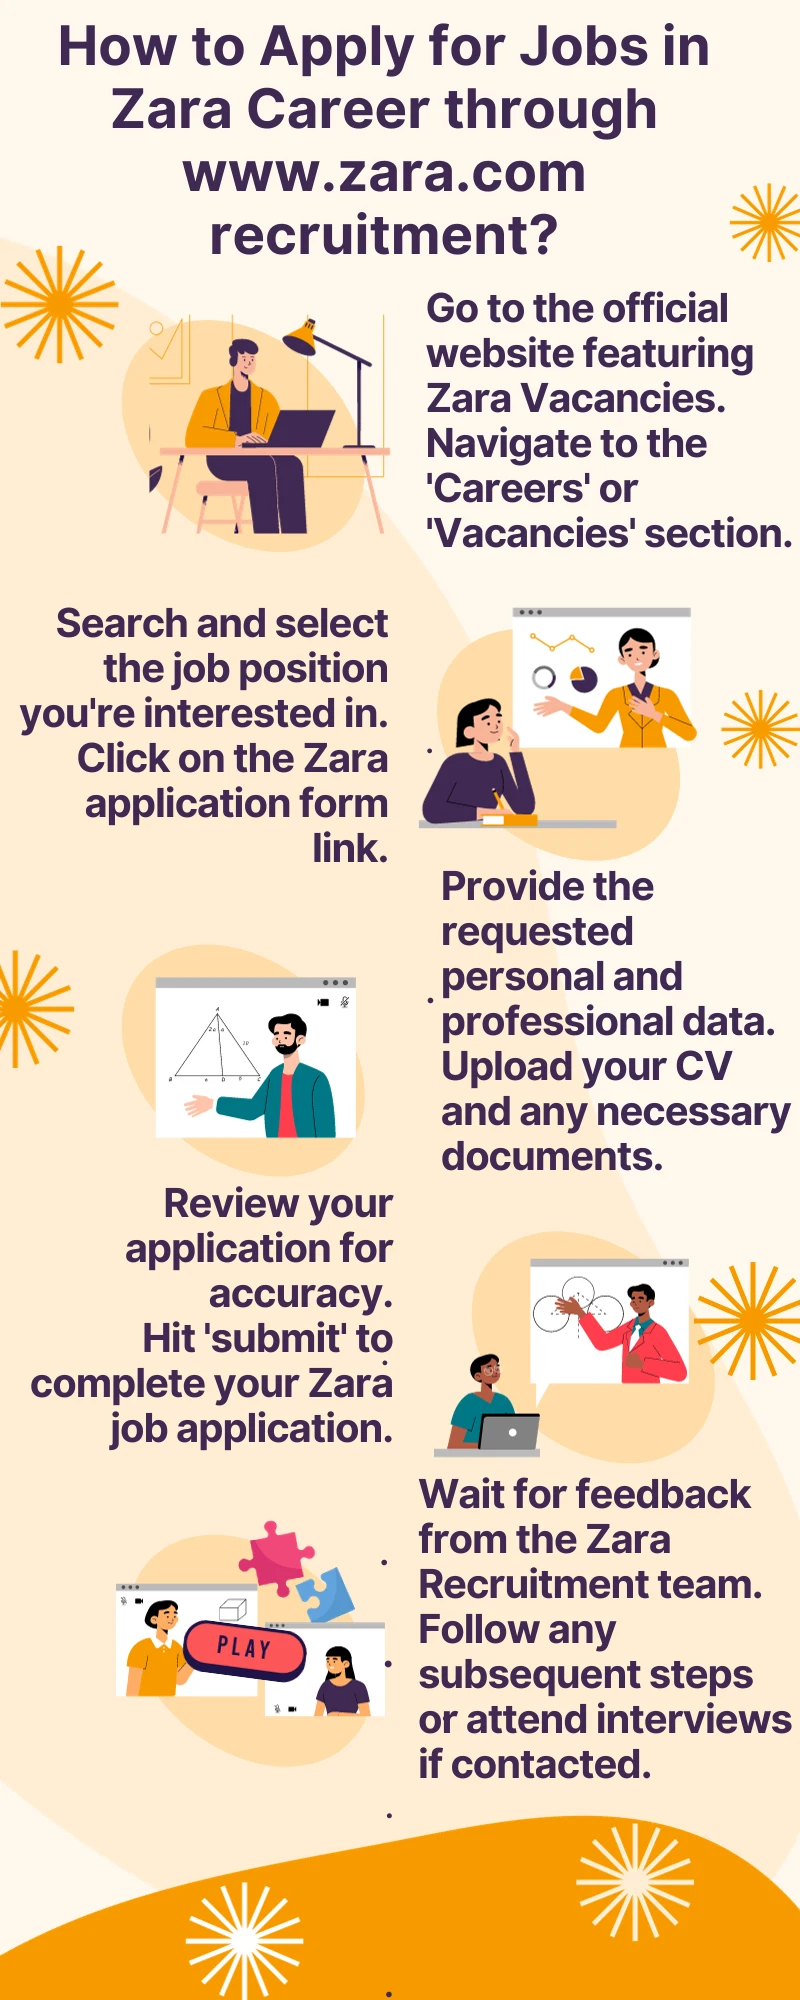 How to Apply for Jobs in Zara Career through www.zara.com recruitment?